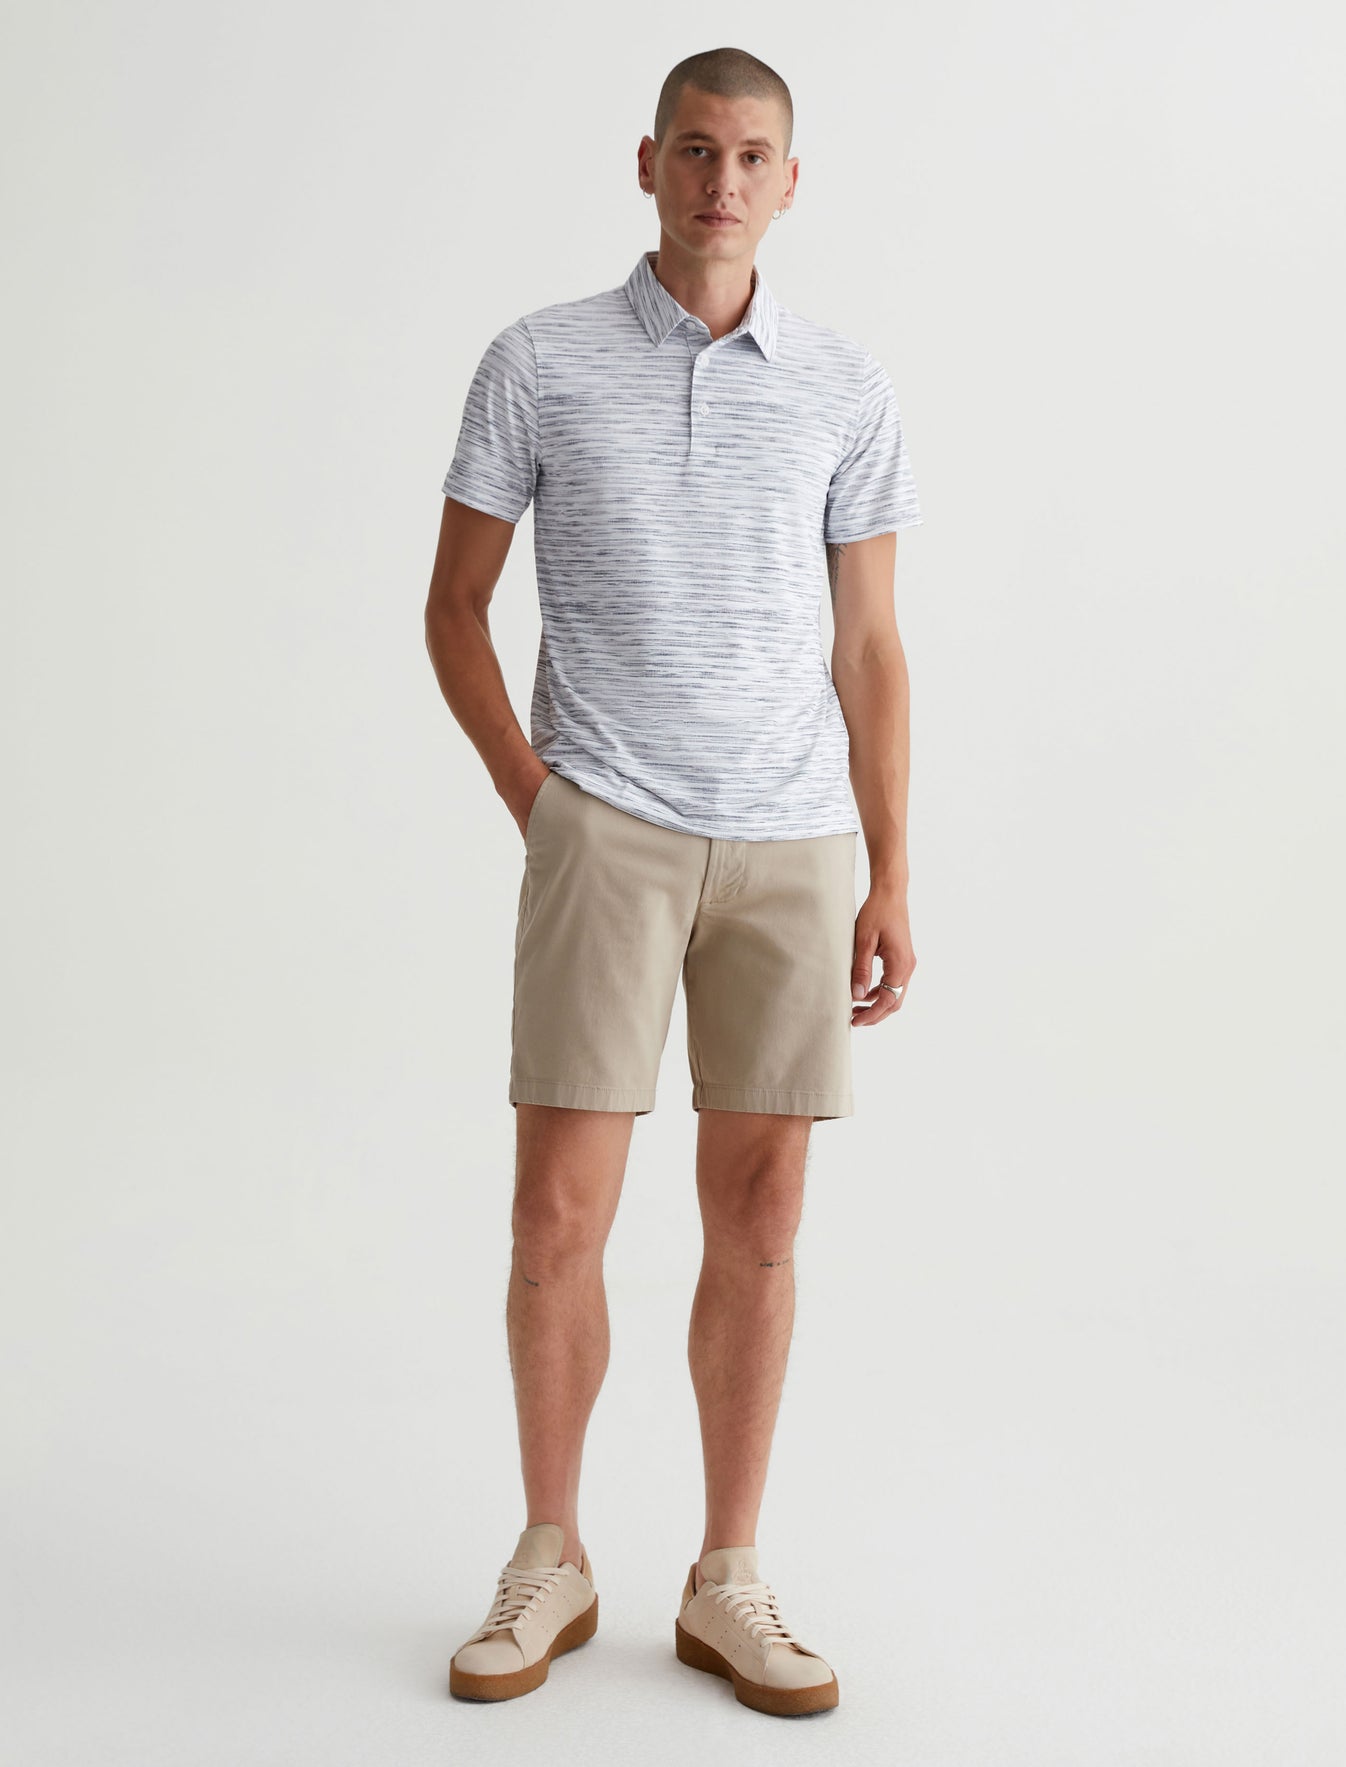 Bryce S/S Polo Slub Stripe Light Grey Classic Fit Short Sleeve Polo T-Shirt Mens Top Photo 3